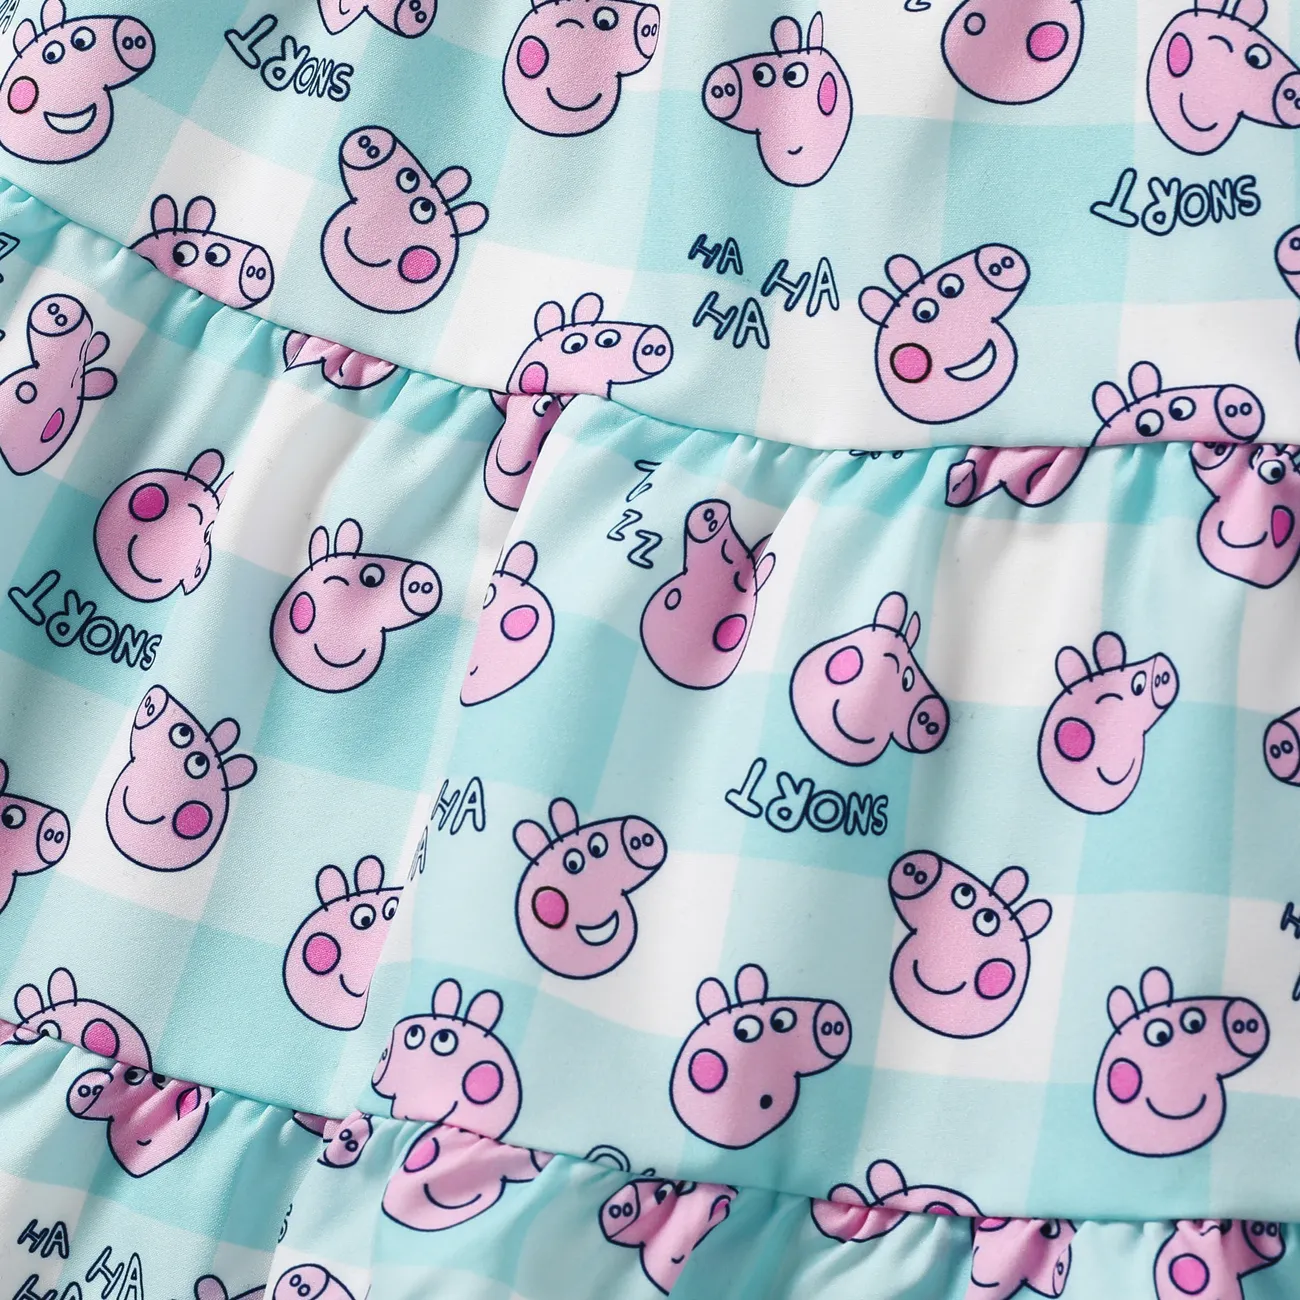 Peppa Pig 1pc Toddler Girls Character FLoral Print Dress
 Blue big image 1